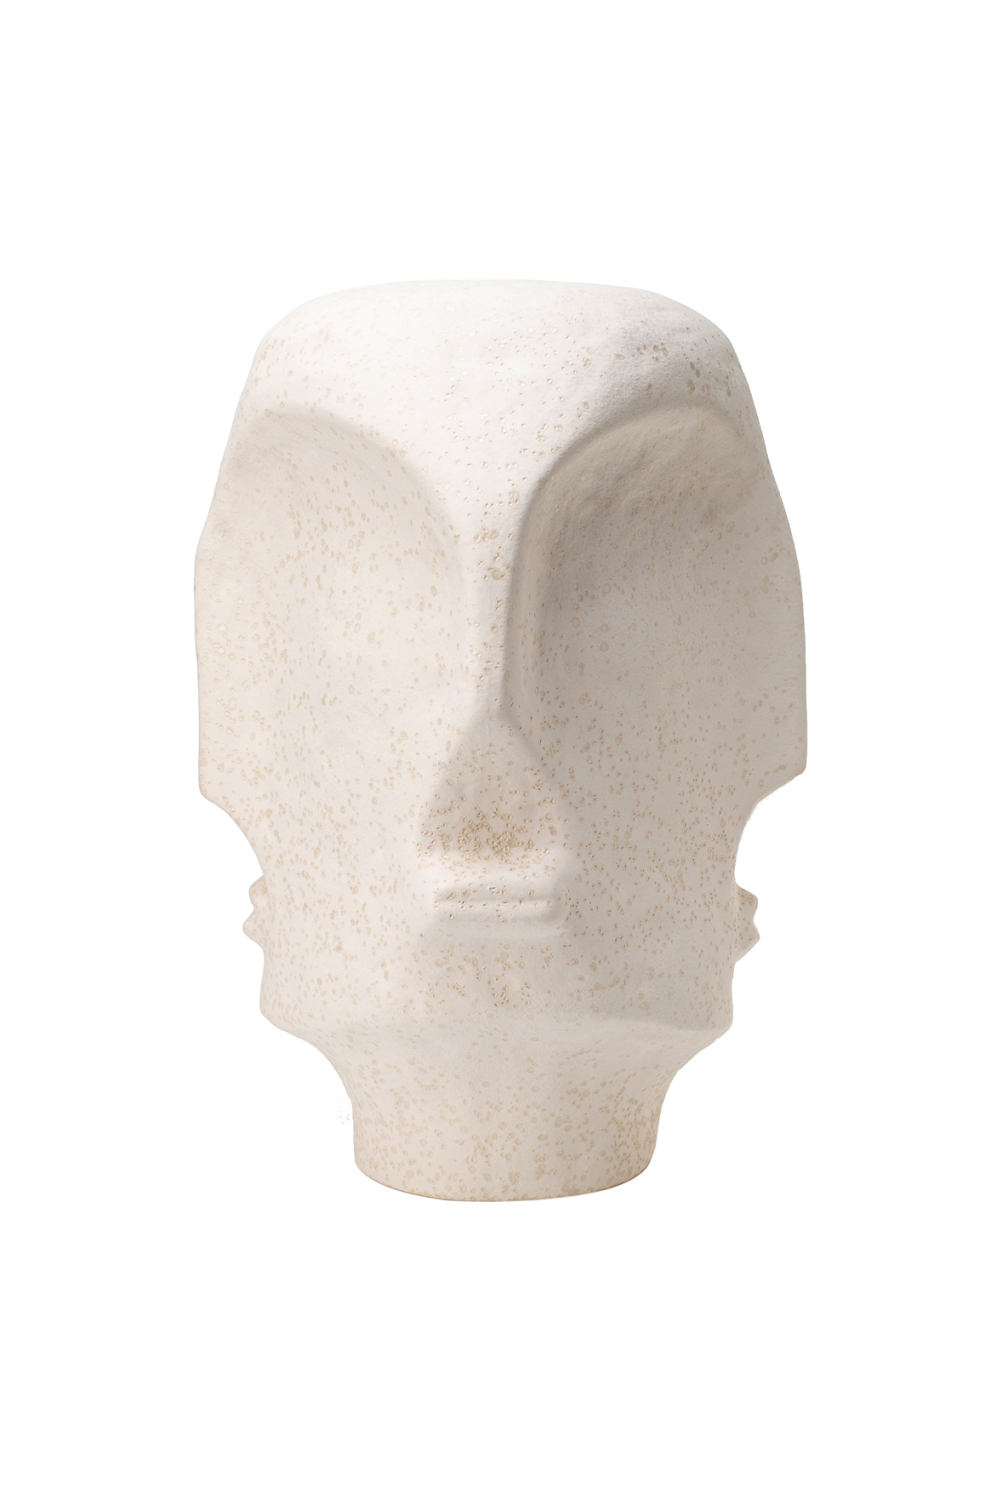 Textured White Ceramic Tribal Sculpture | Liang & Eimil Janus | OROA